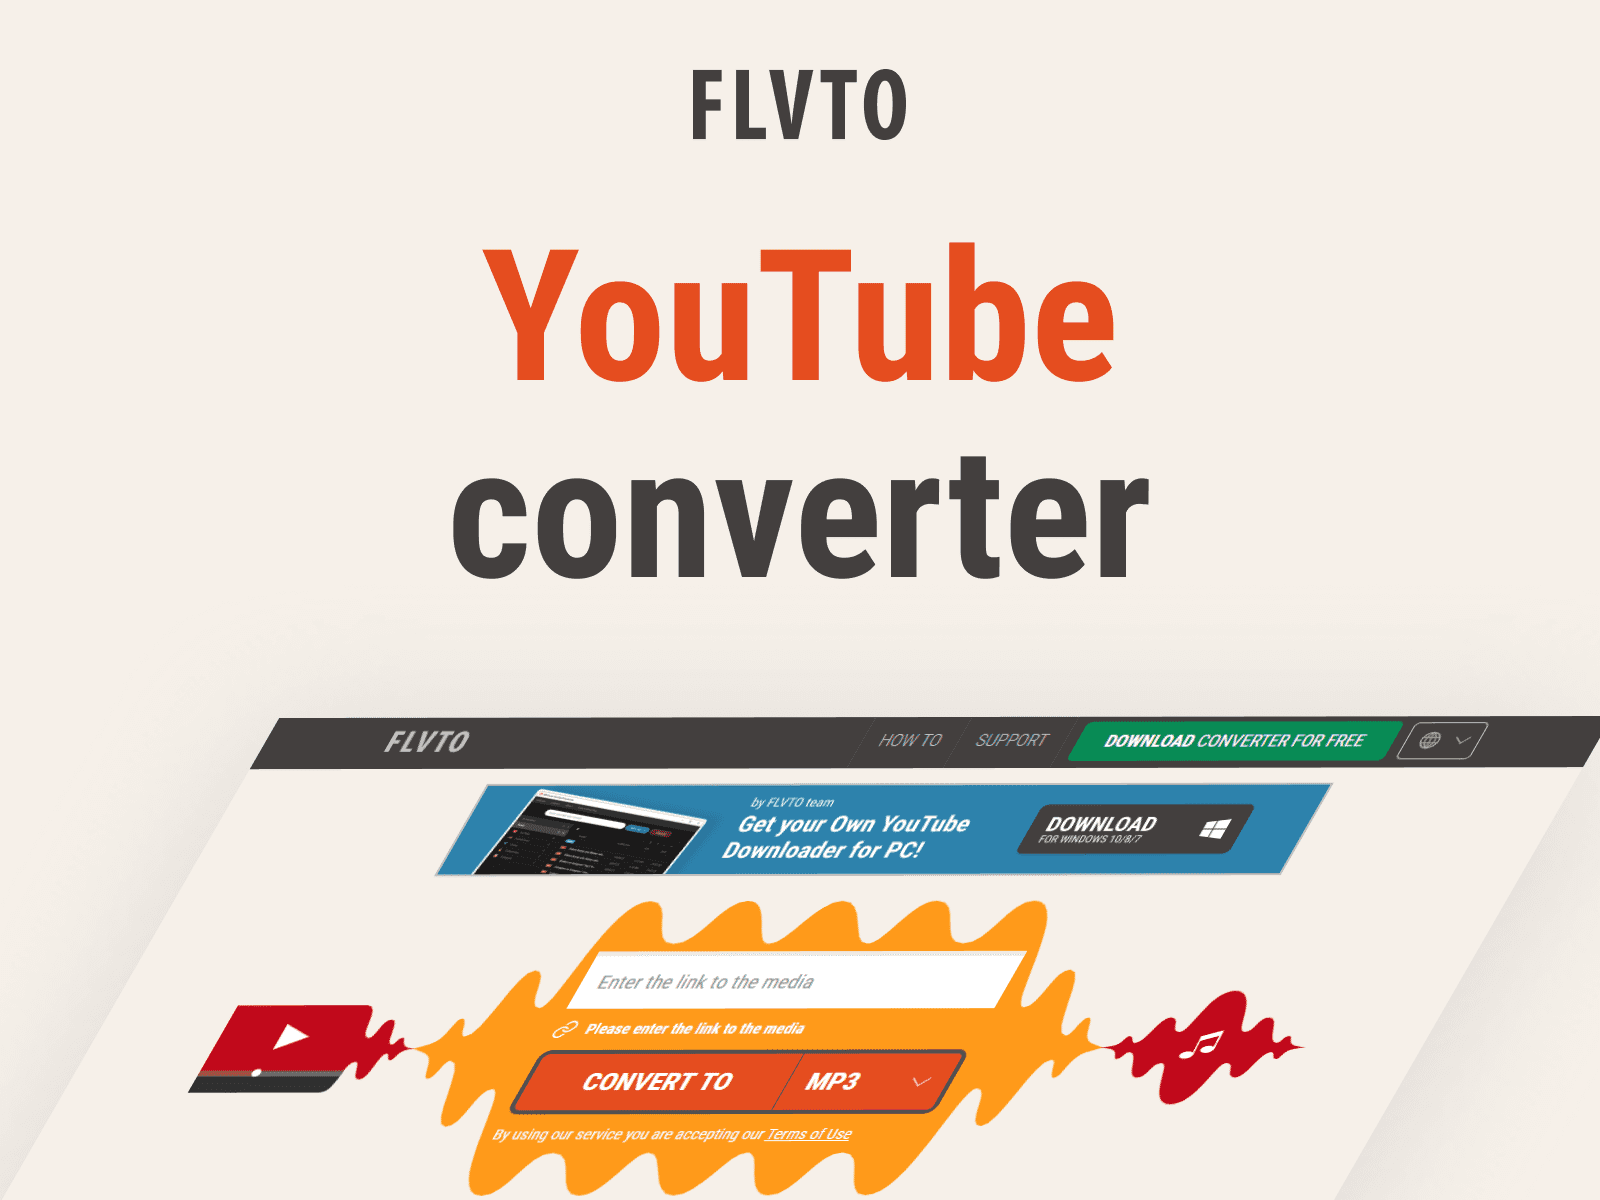 Flvto youtube downloader free download for windows 10.